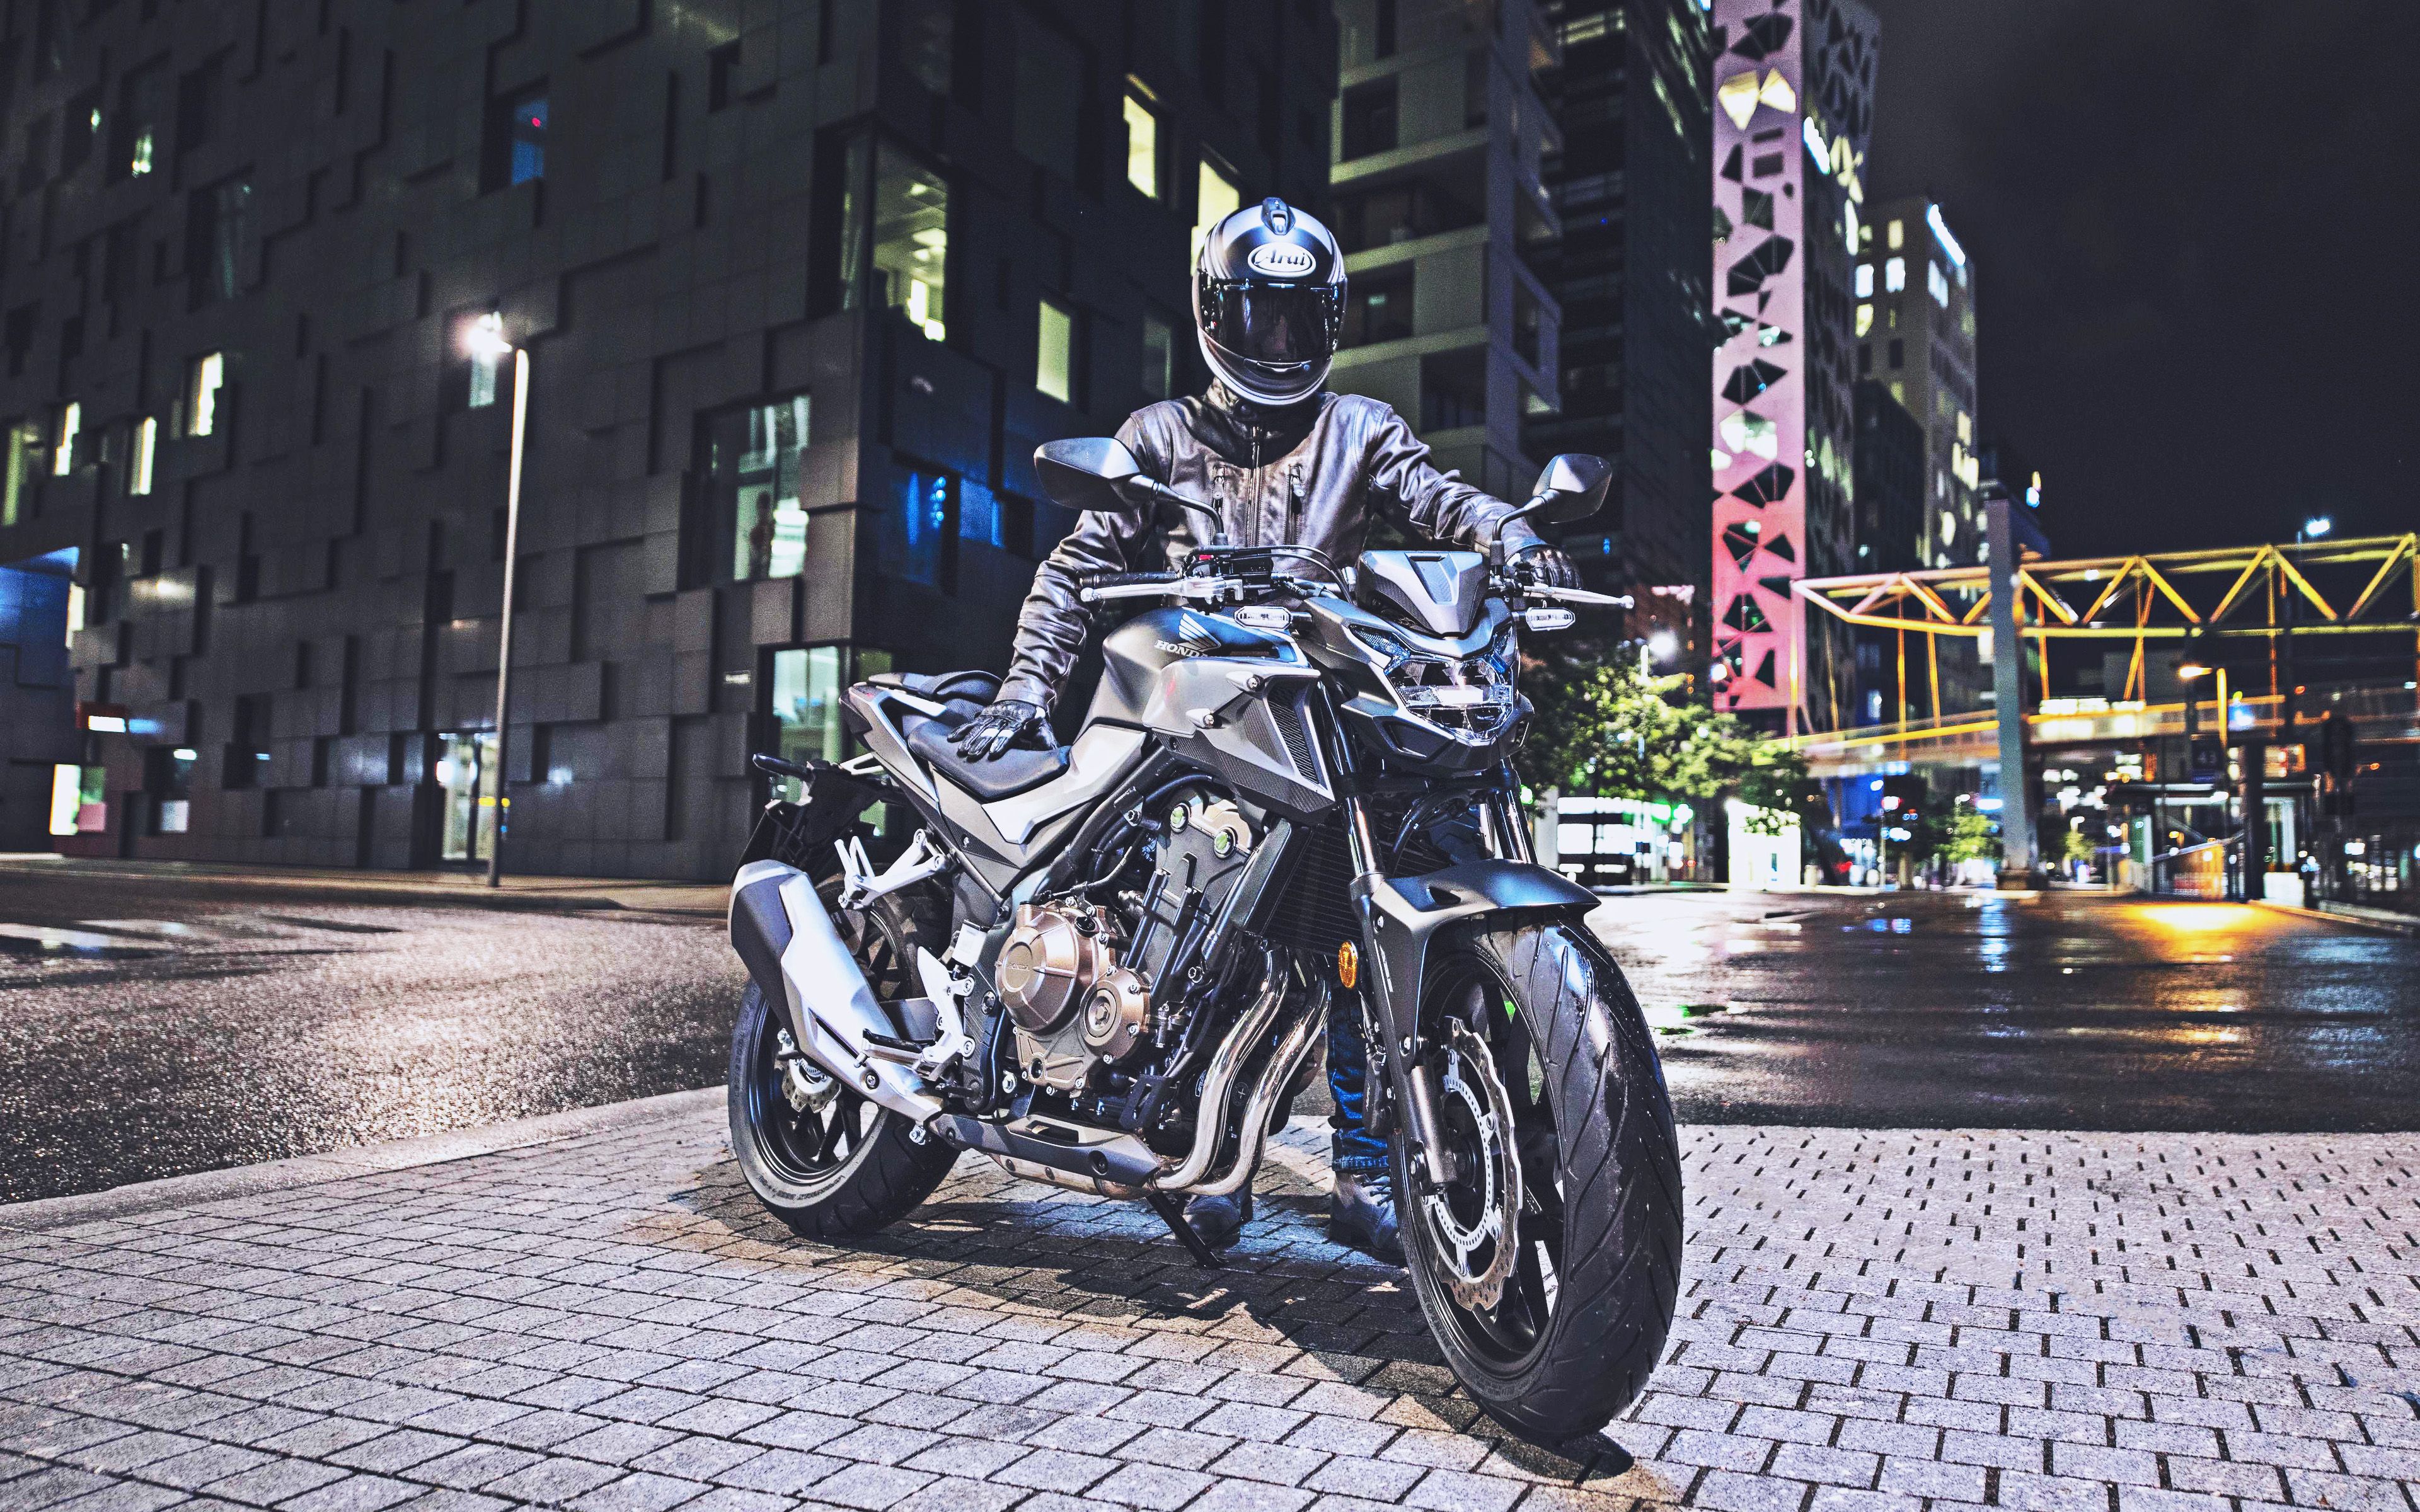 Download wallpaper Honda CB500F, 4k, biker with motorcycle, 2019